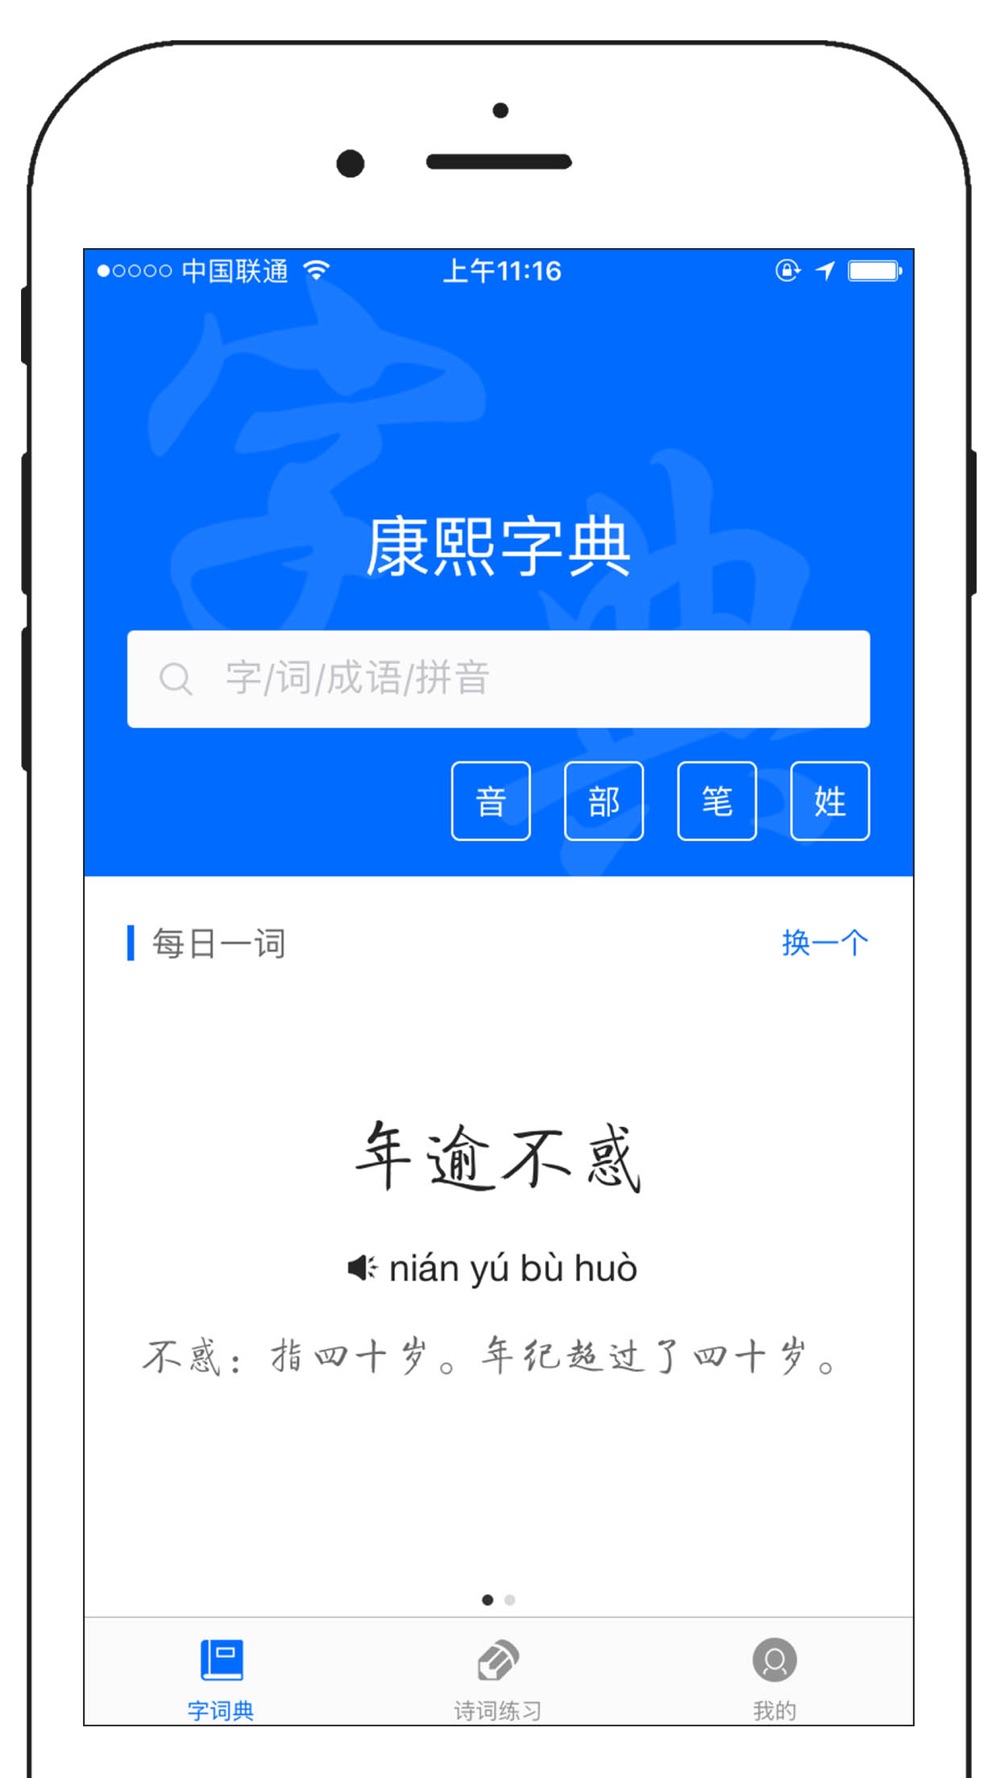 康熙字典 中国汉字拼音偏旁部首笔画查询free Download App For Iphone Steprimo Com